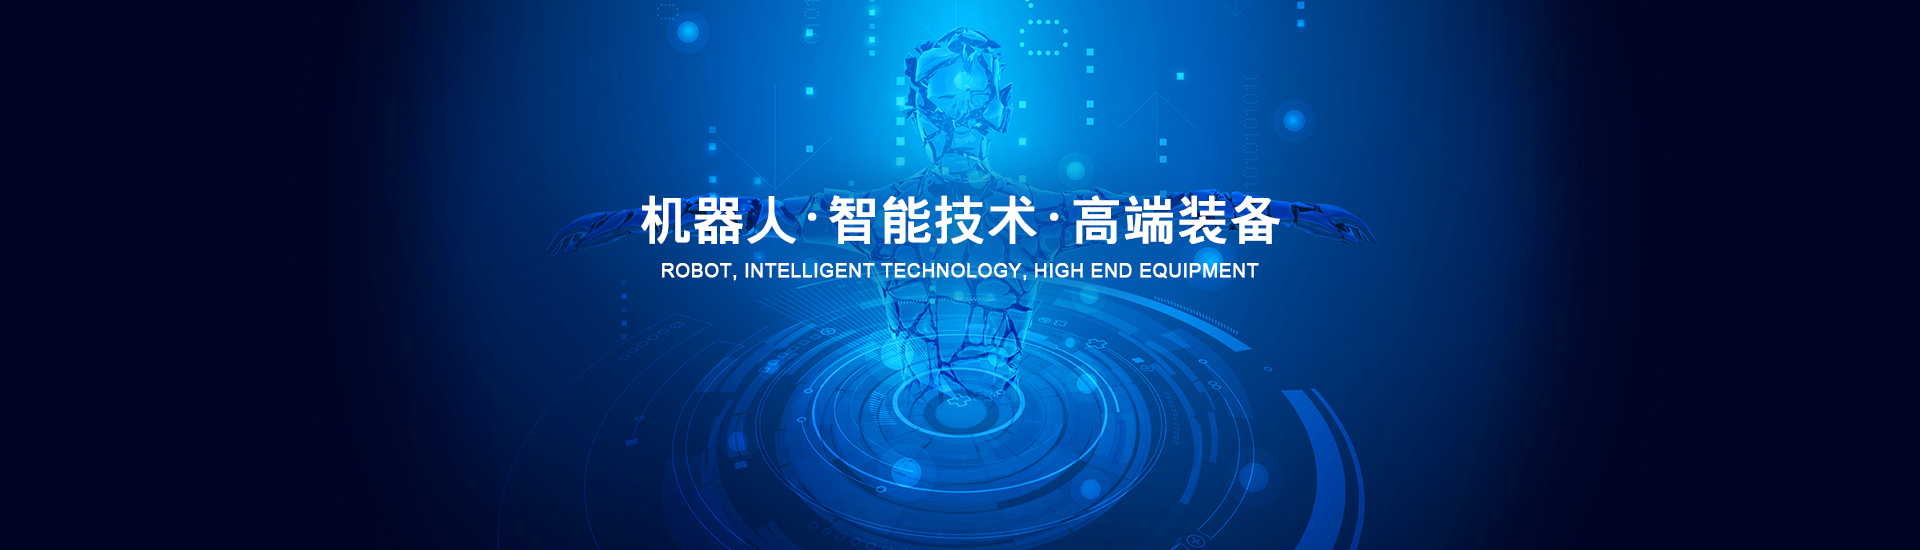 Guangzhou Fengqiao Automation Technology Co., Ltd.